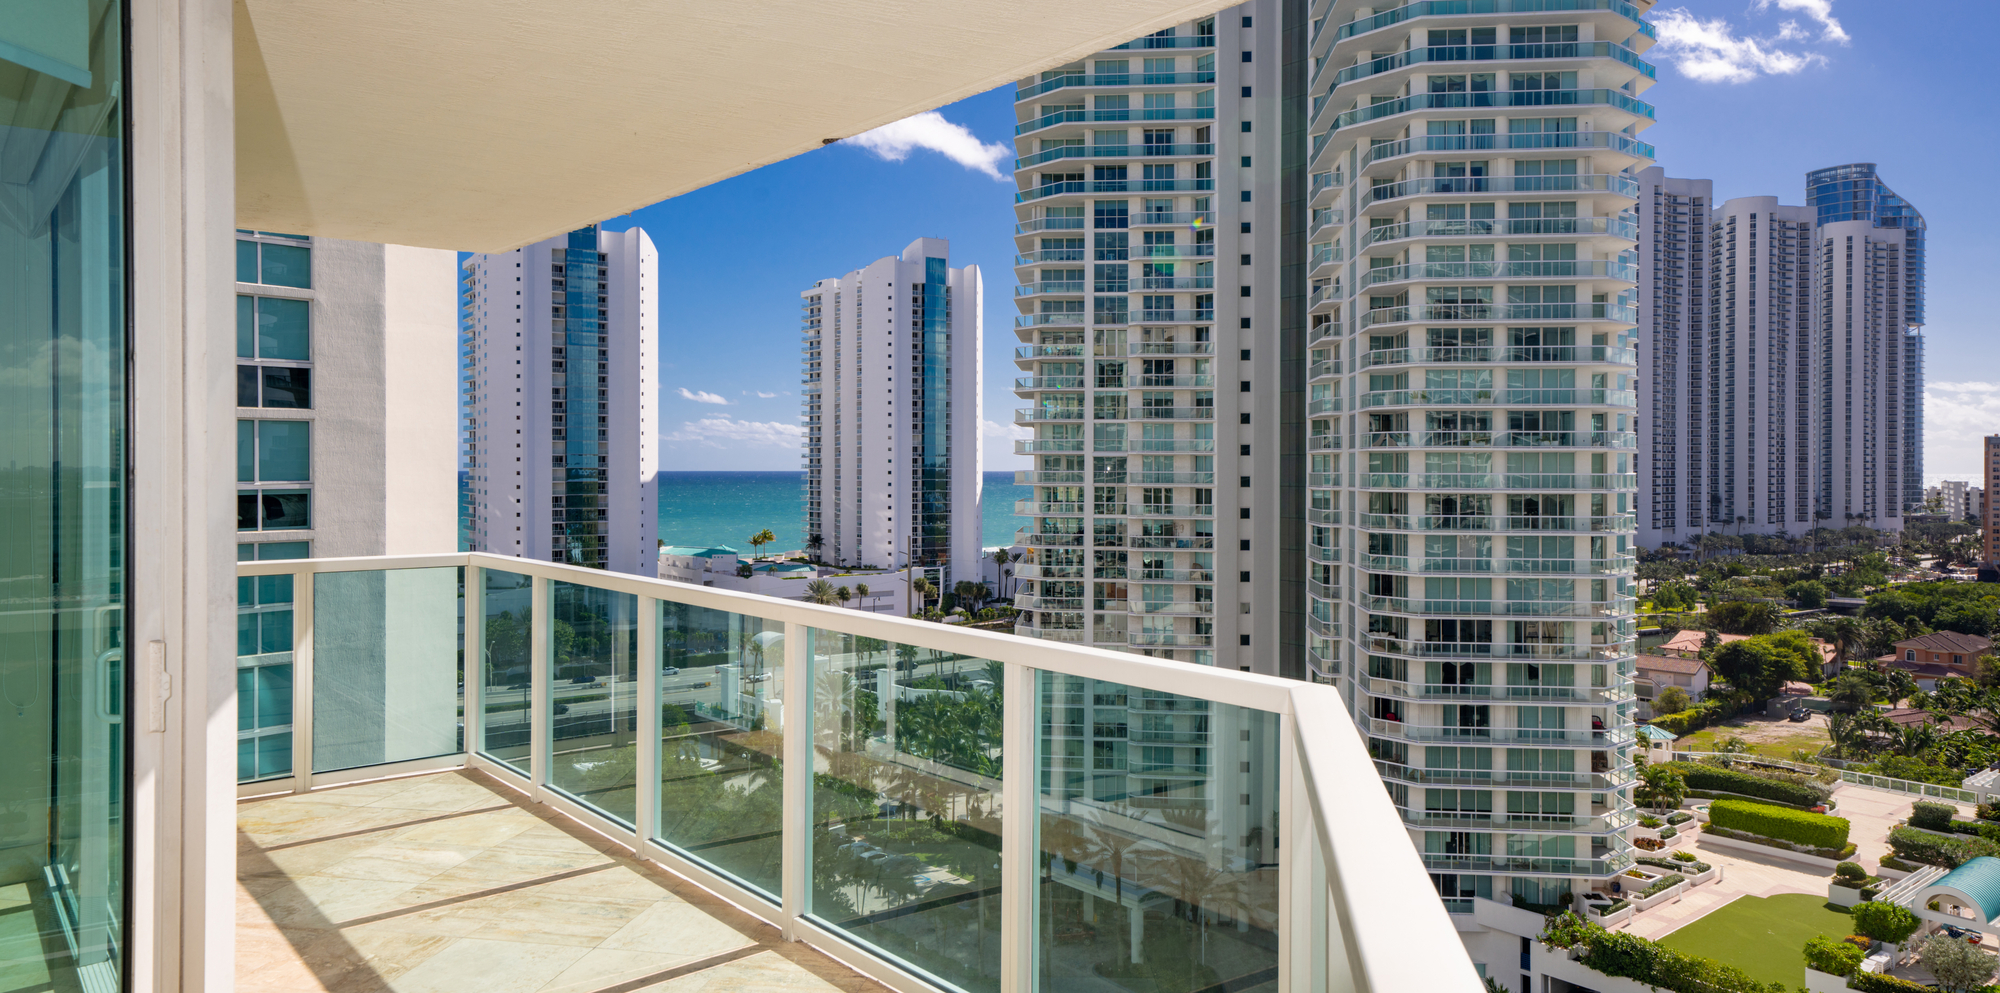 Apartment condominium flat balcony with view of coastal building